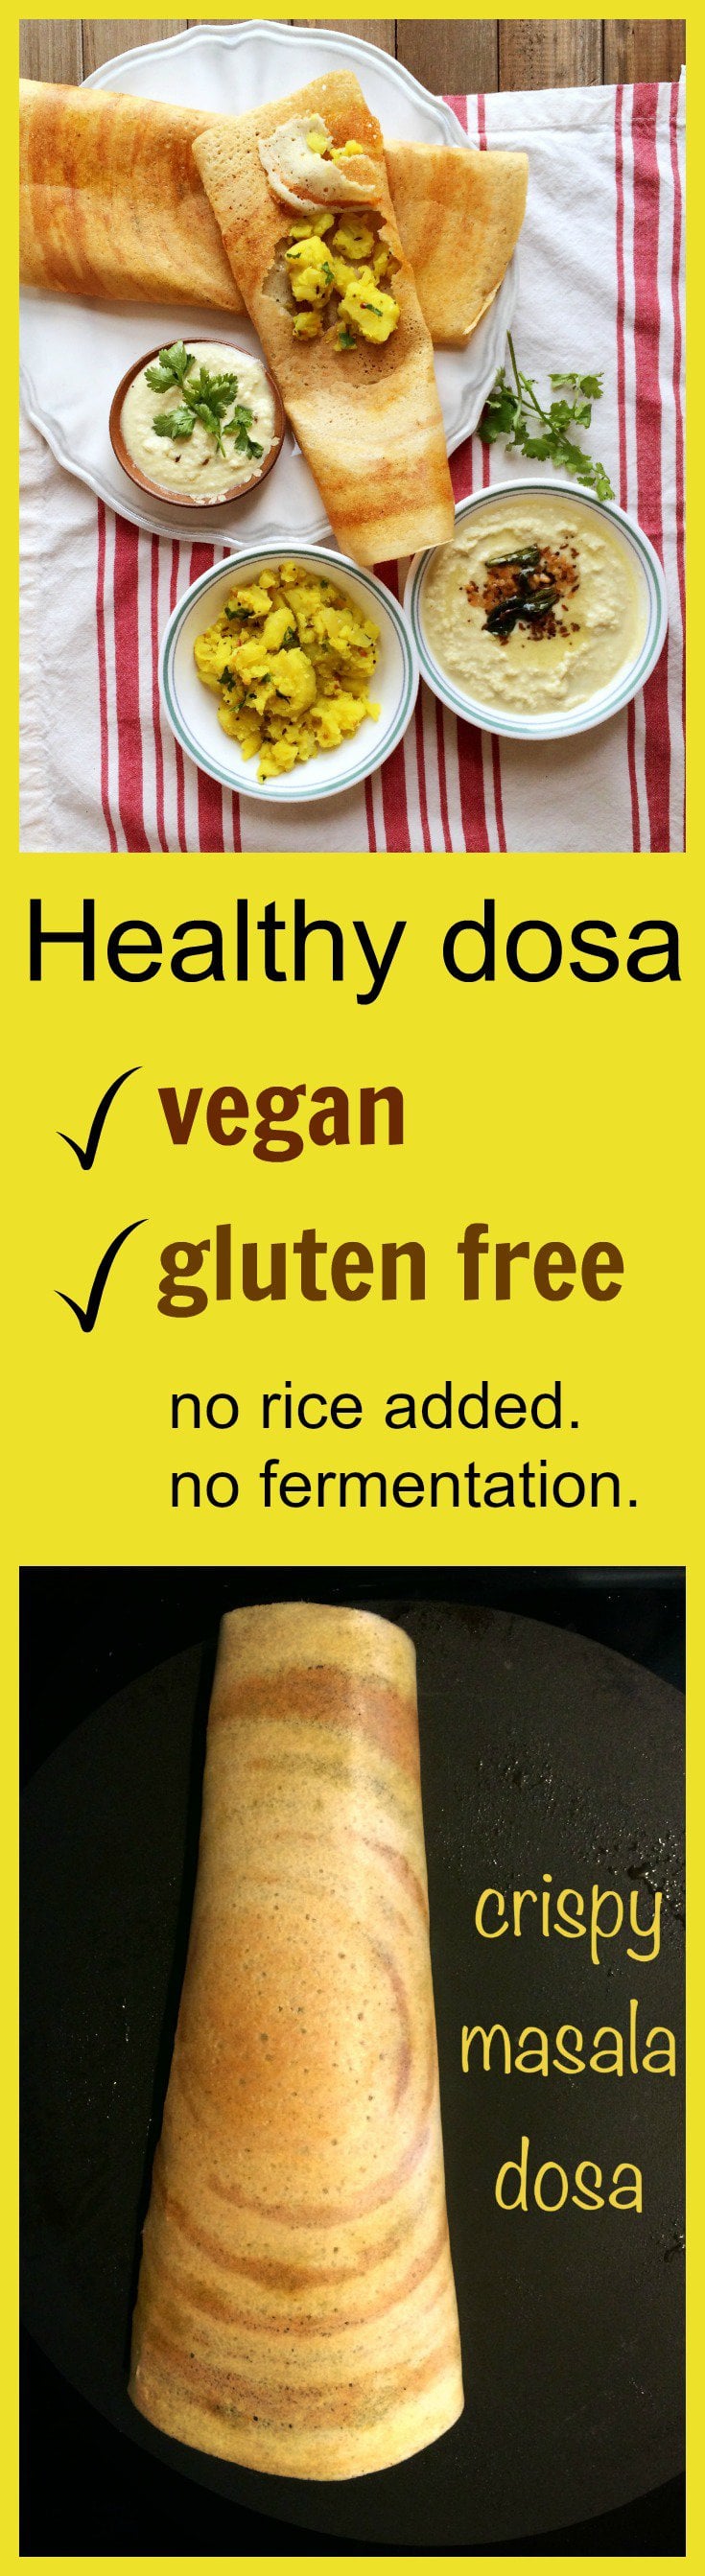 healthy no fermentation no rice dosa #vegan #glutenfree #crepes #indian #instant